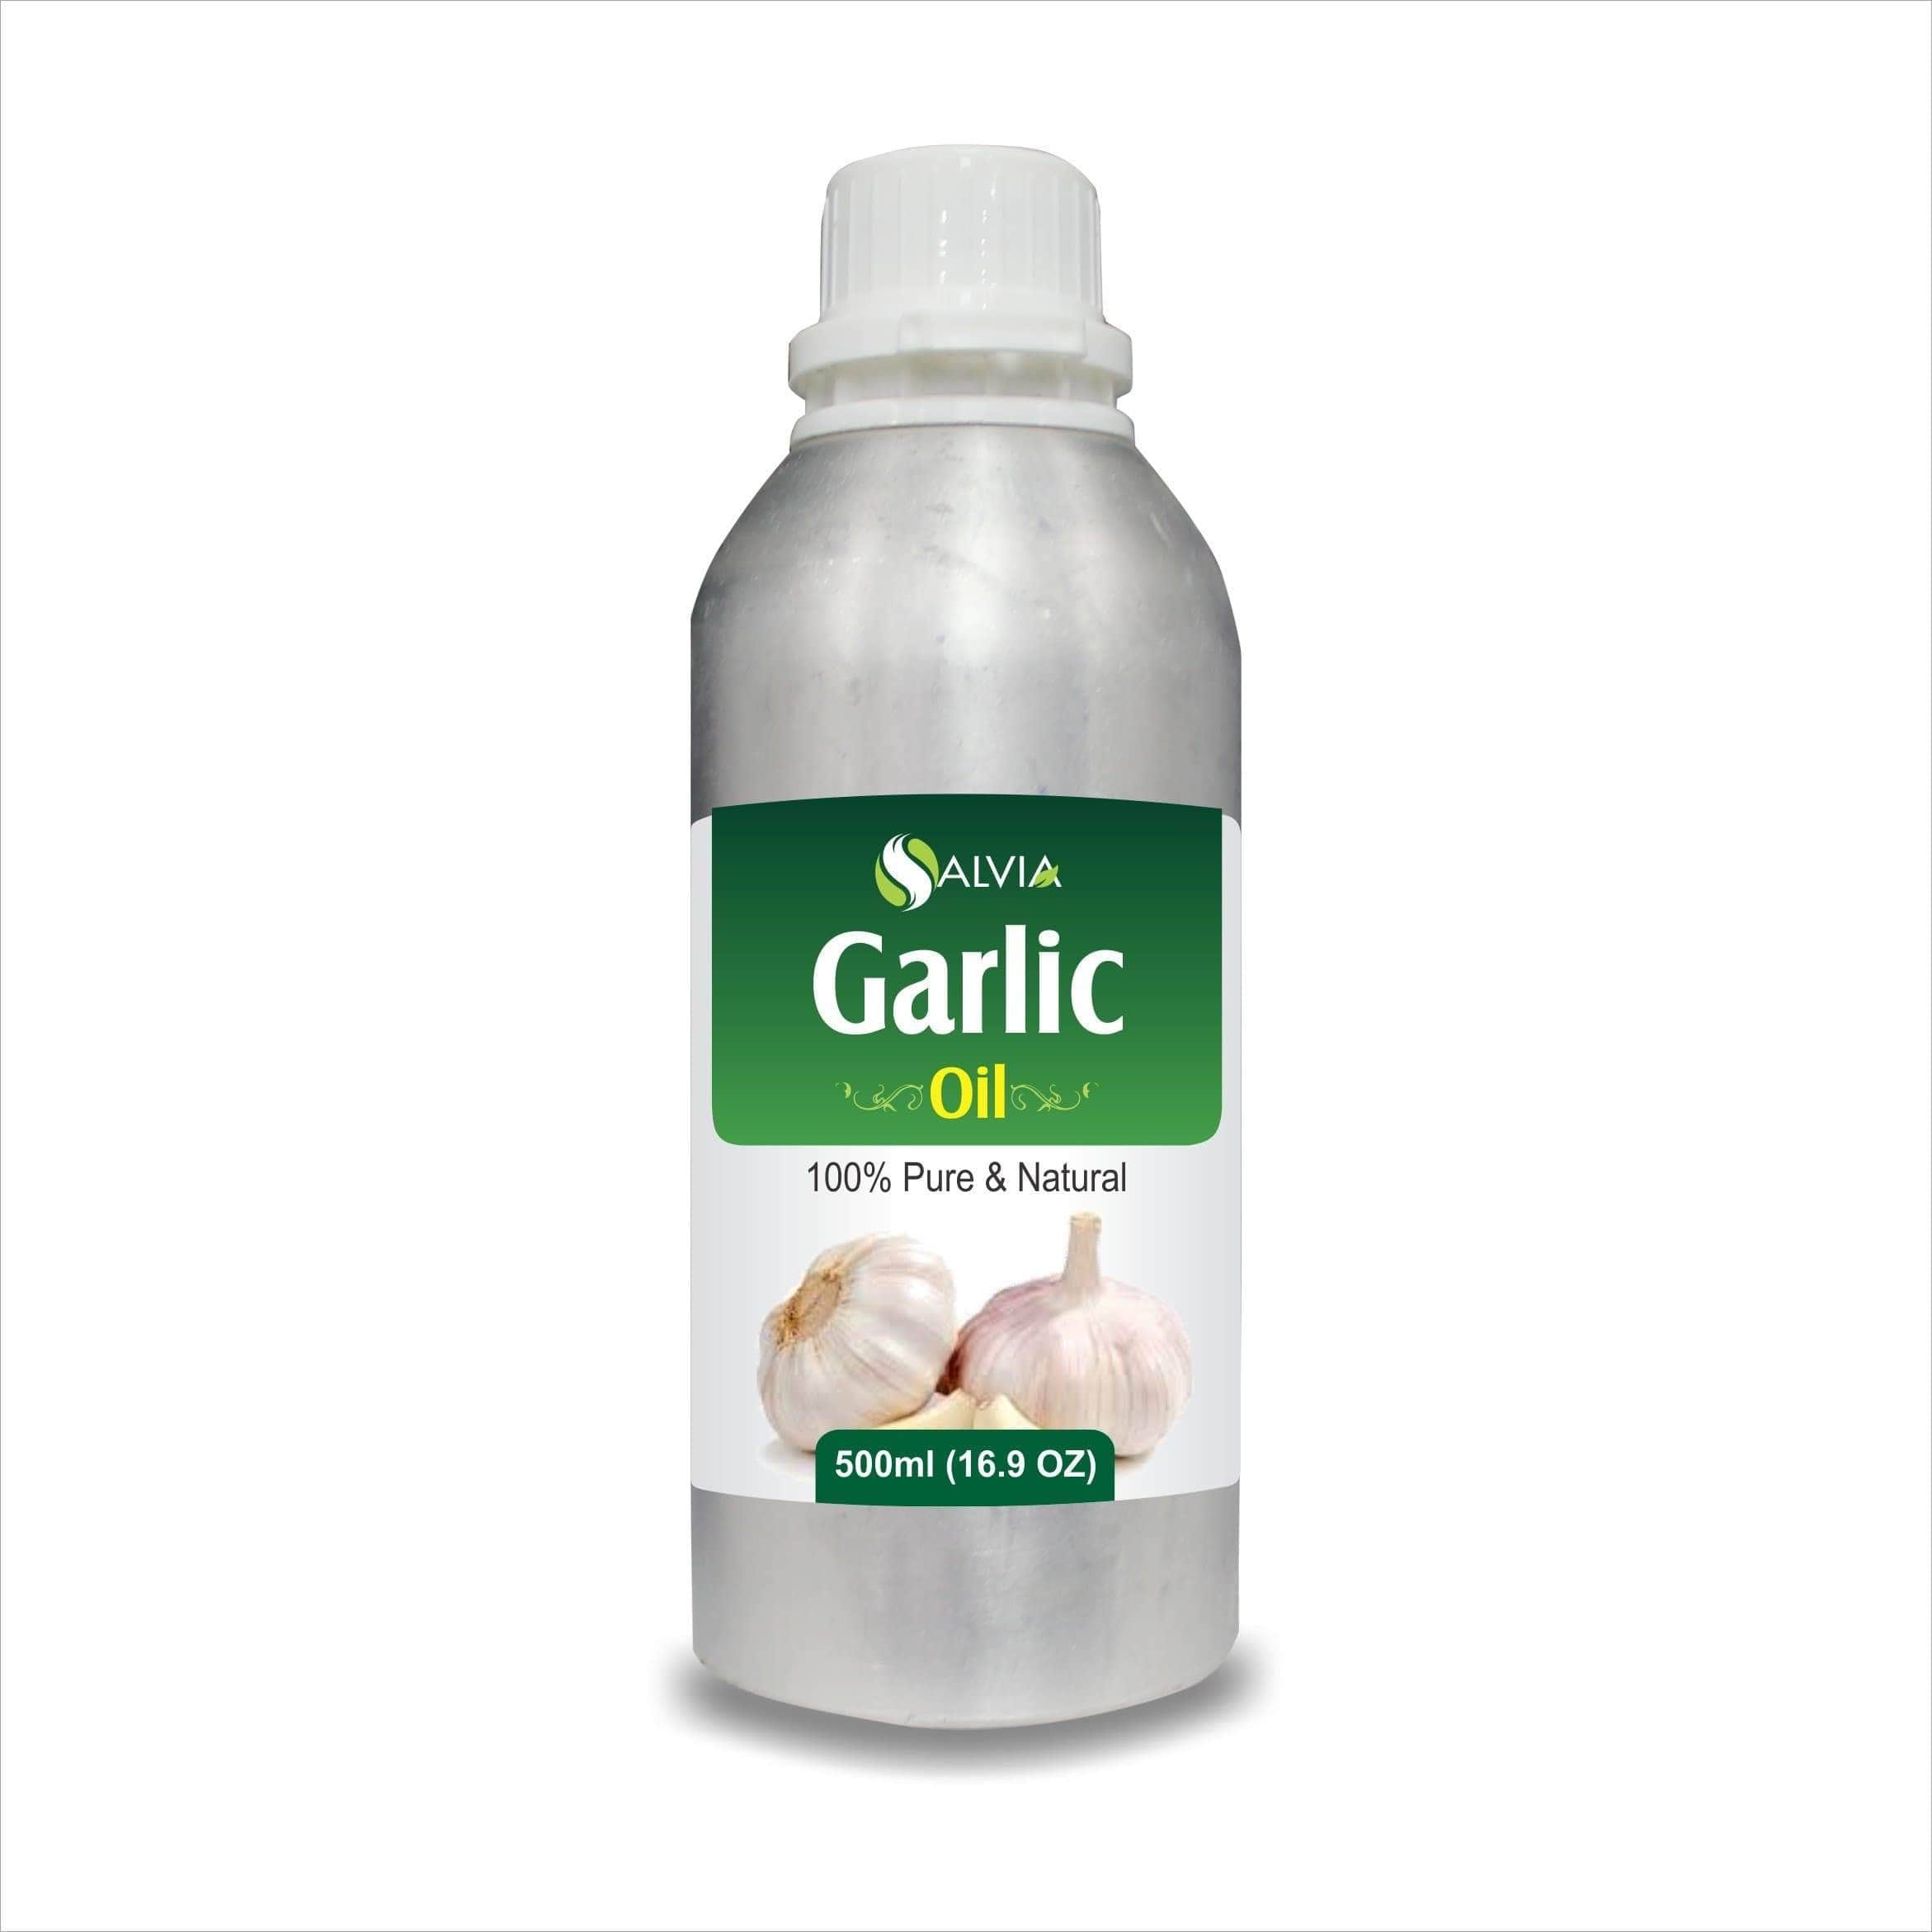 garlic oil benefits in hindi